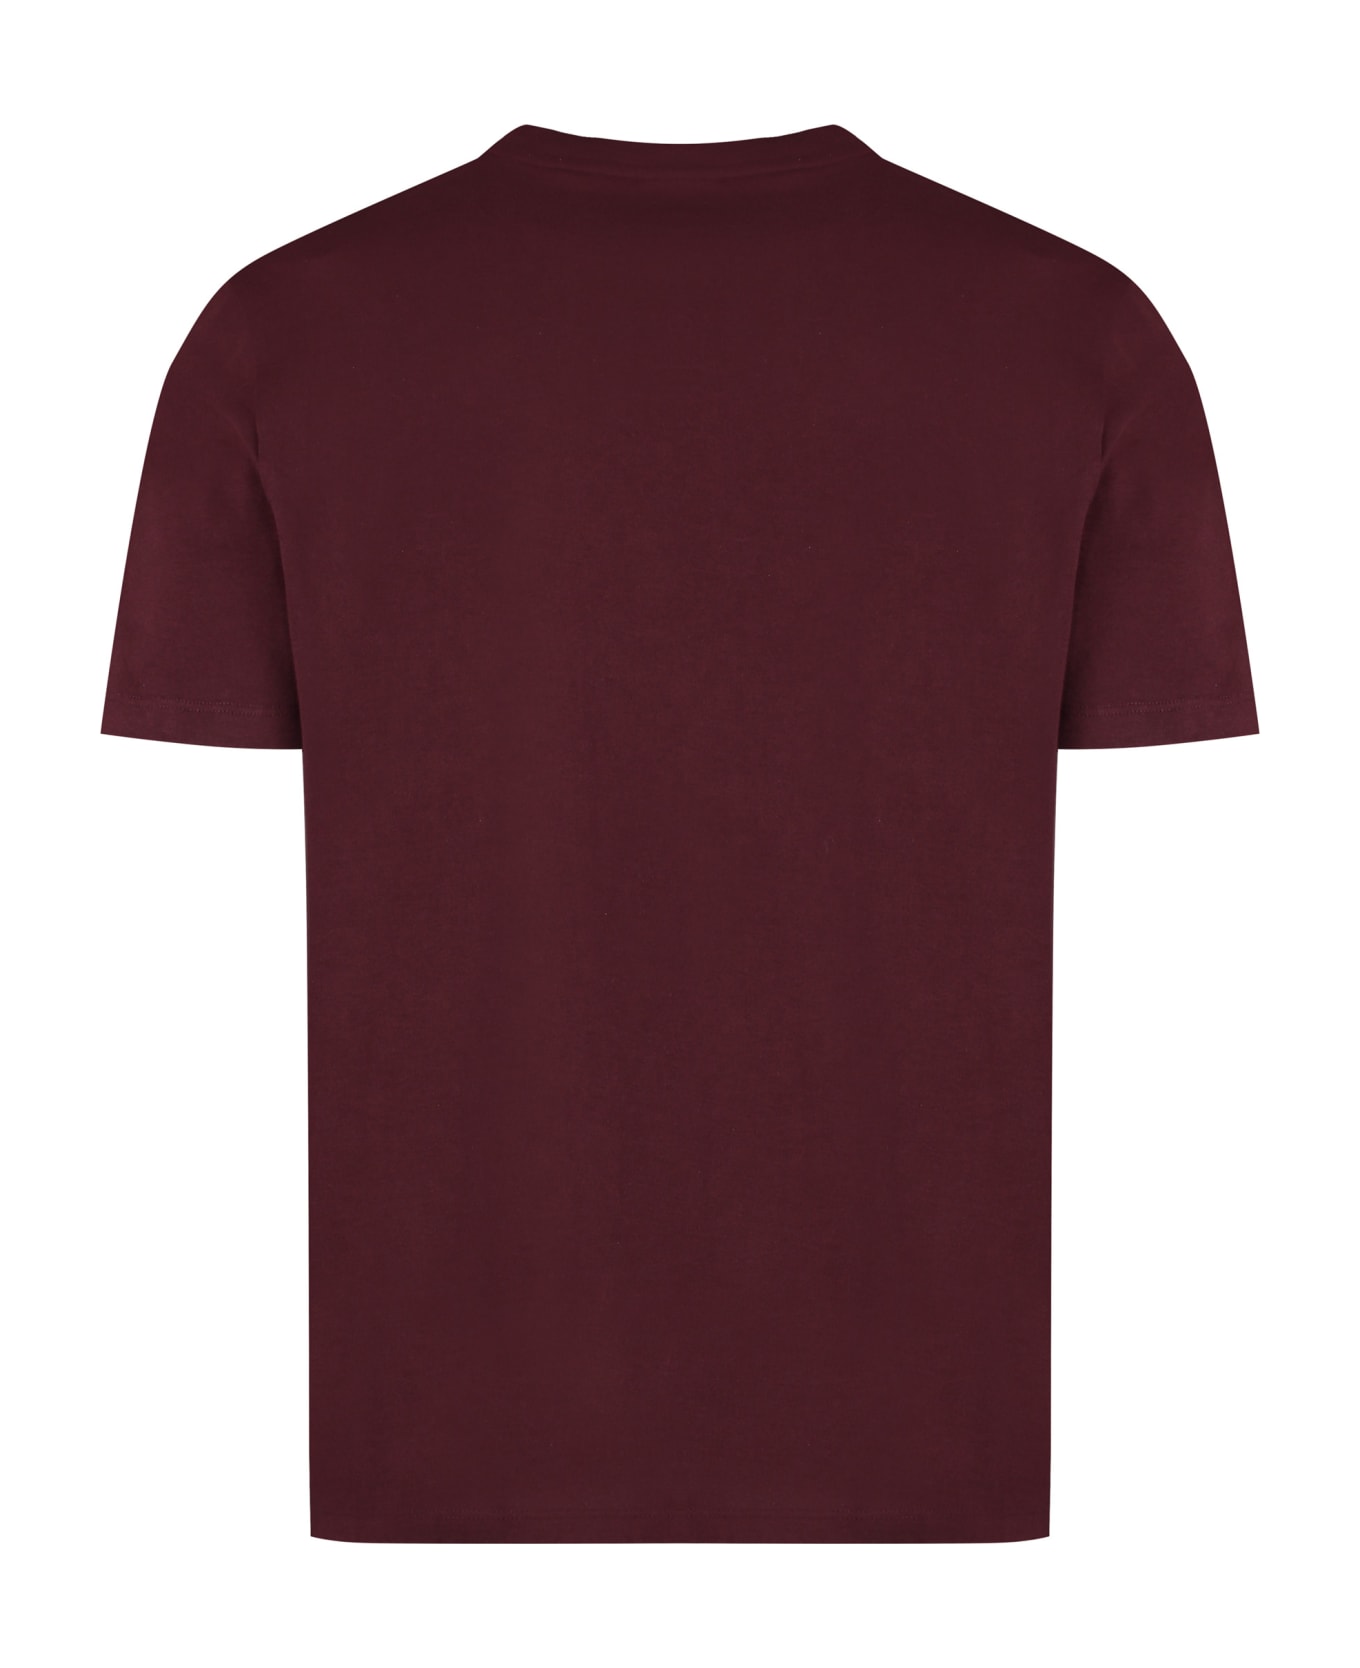 Hugo Boss Cotton Crew-neck T-shirt - Red-purple or grape